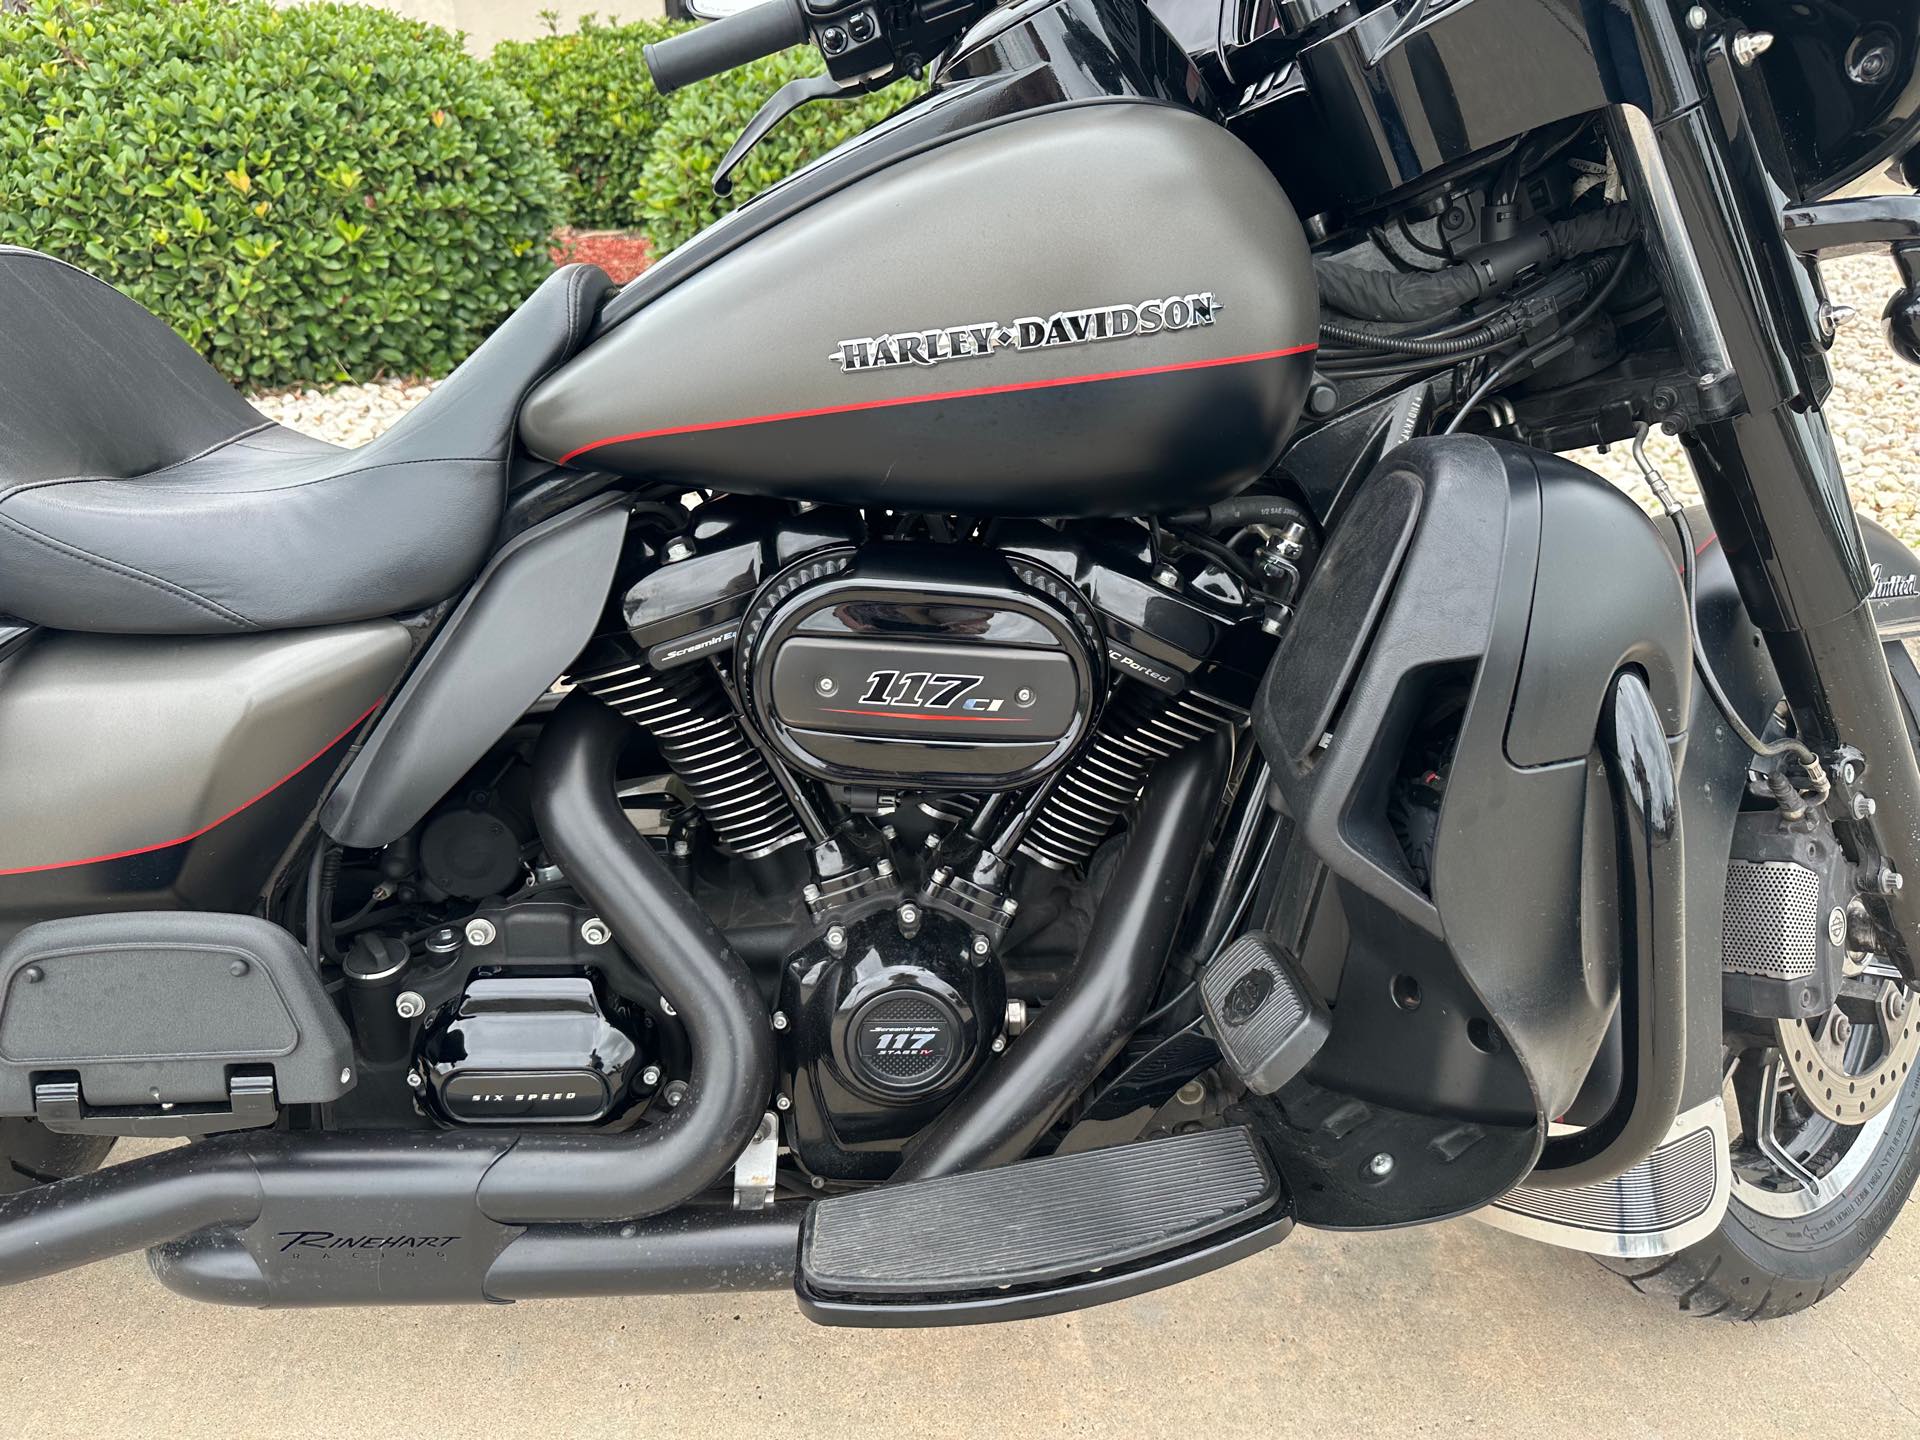 2019 Harley-Davidson Electra Glide Ultra Limited Low at Corpus Christi Harley Davidson